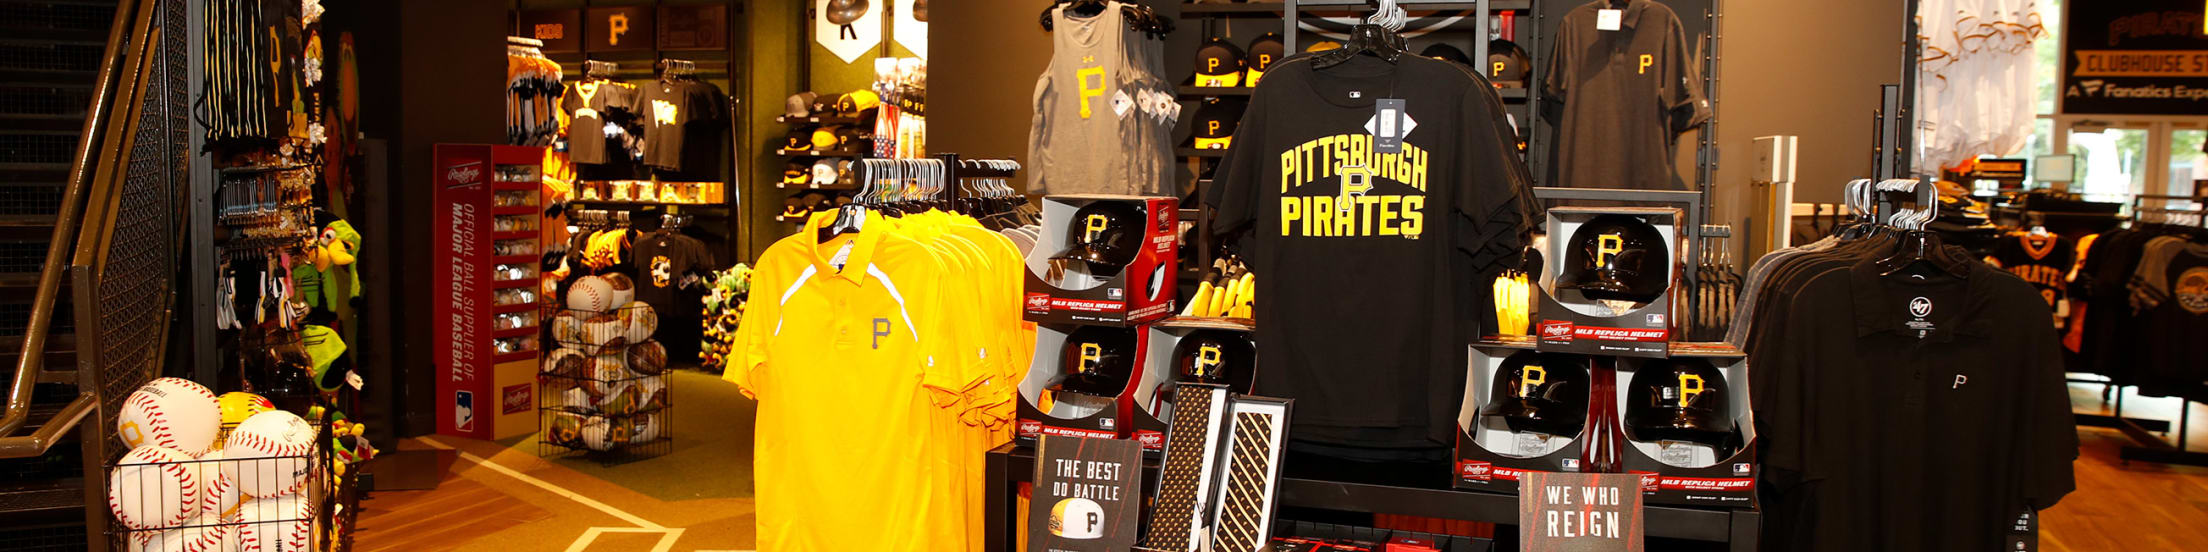 pittsburgh pirates pro shop